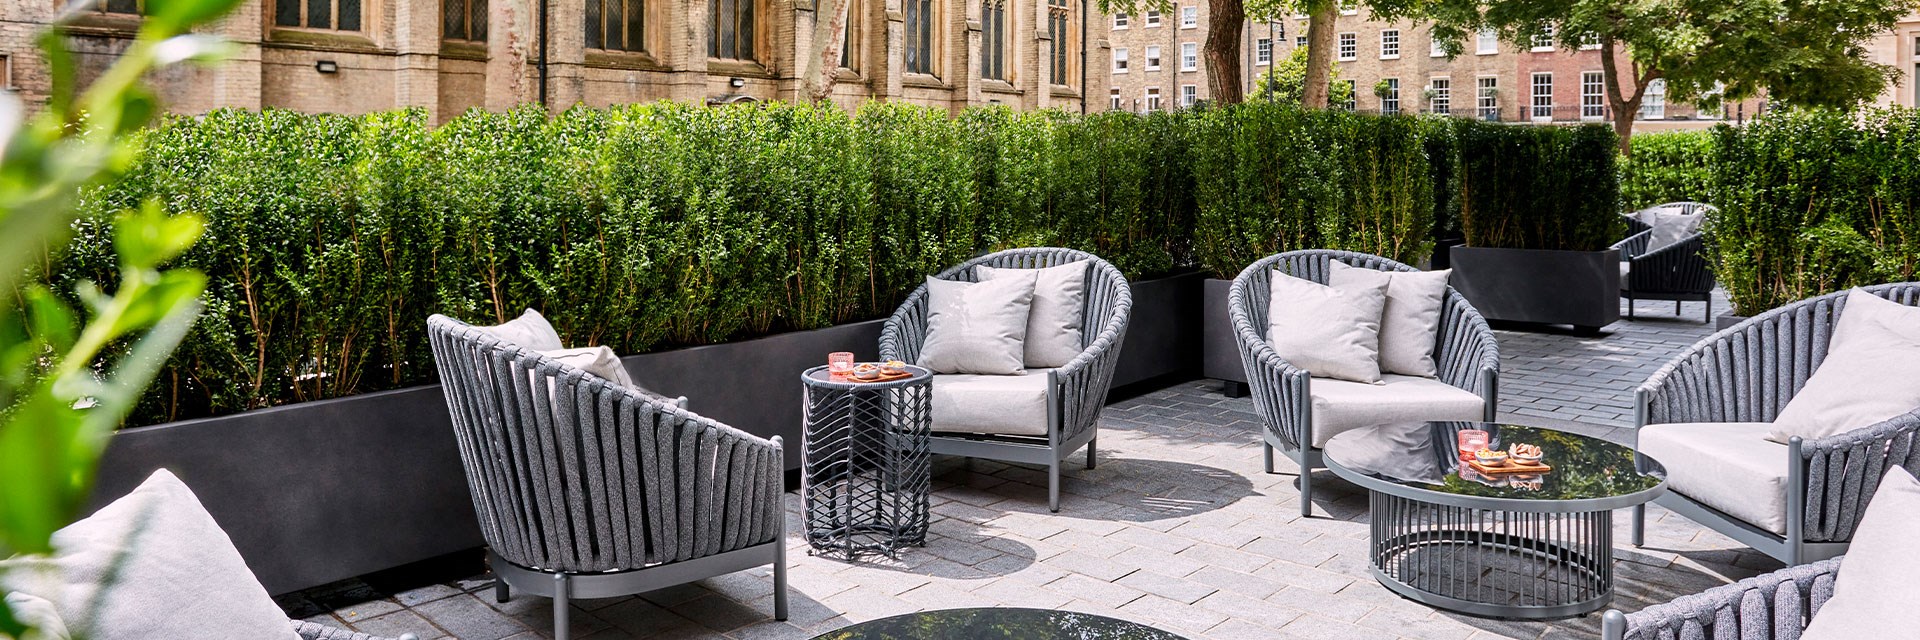 The Berkeley Bar & Terrace: vie wof terrace with grey alfresco tables an chairs.